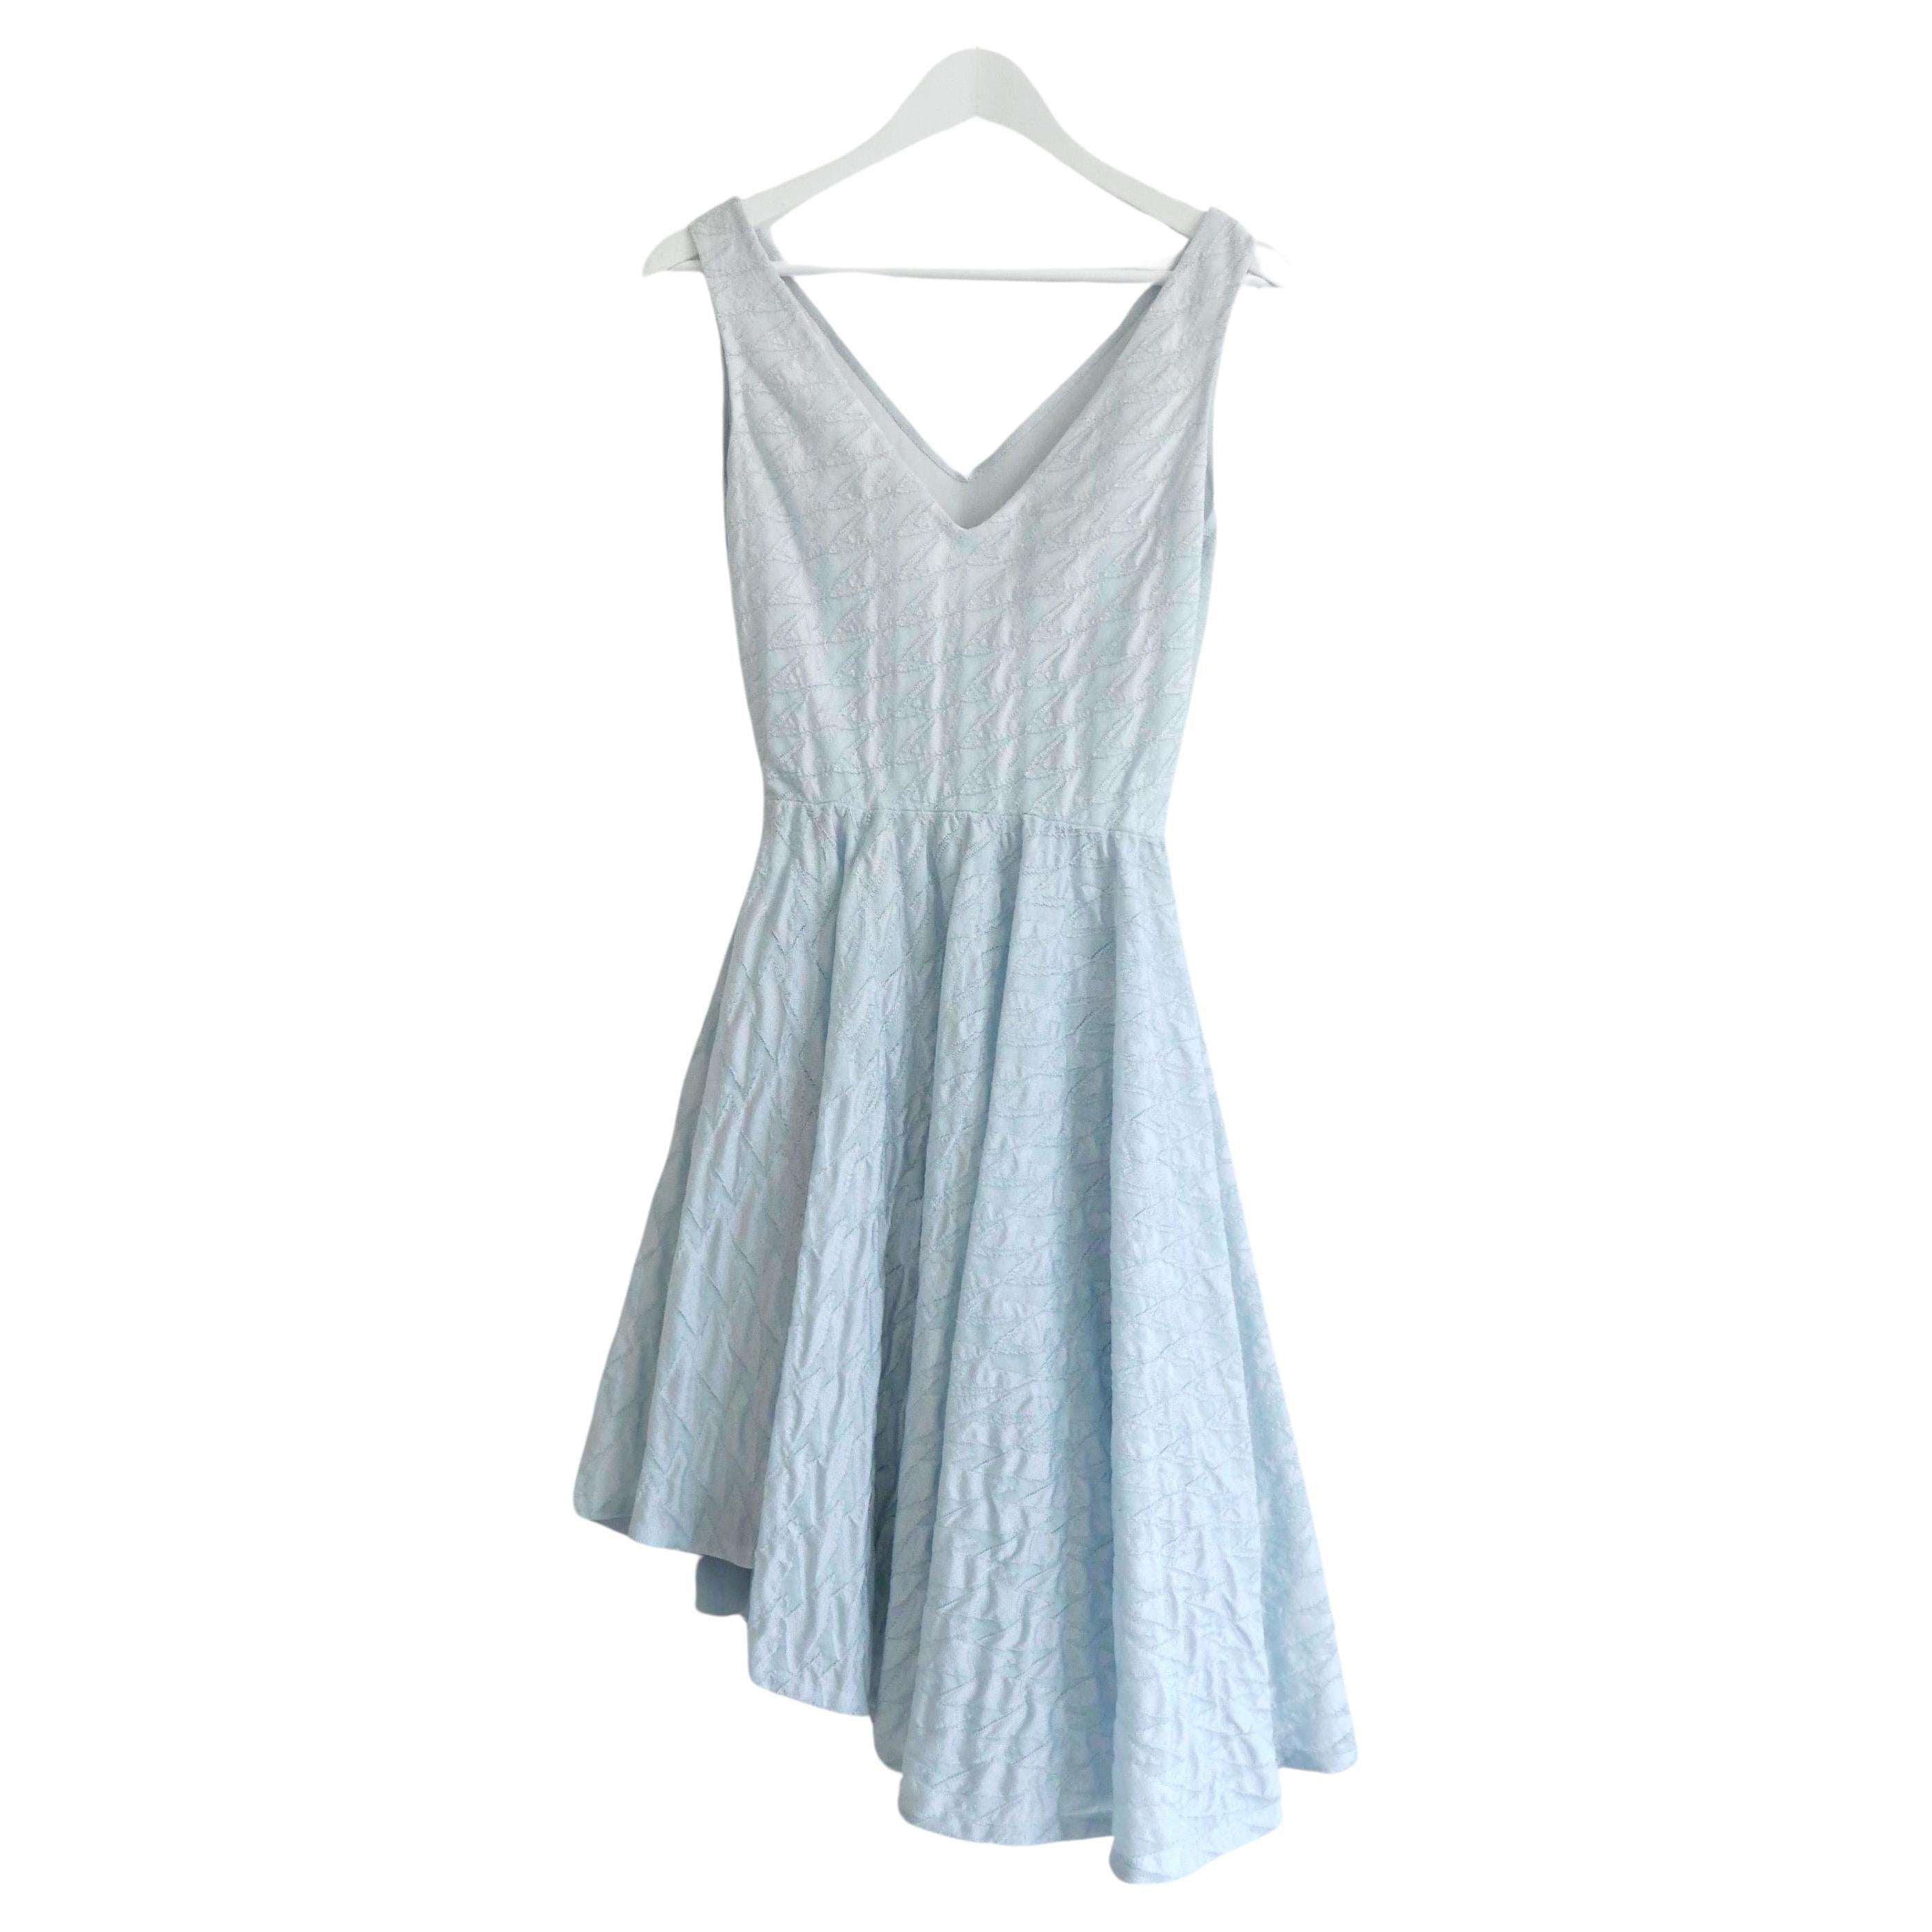 Dior x Raf Simons Dior Fall 2014 Pale Blue Textured Dress For Sale